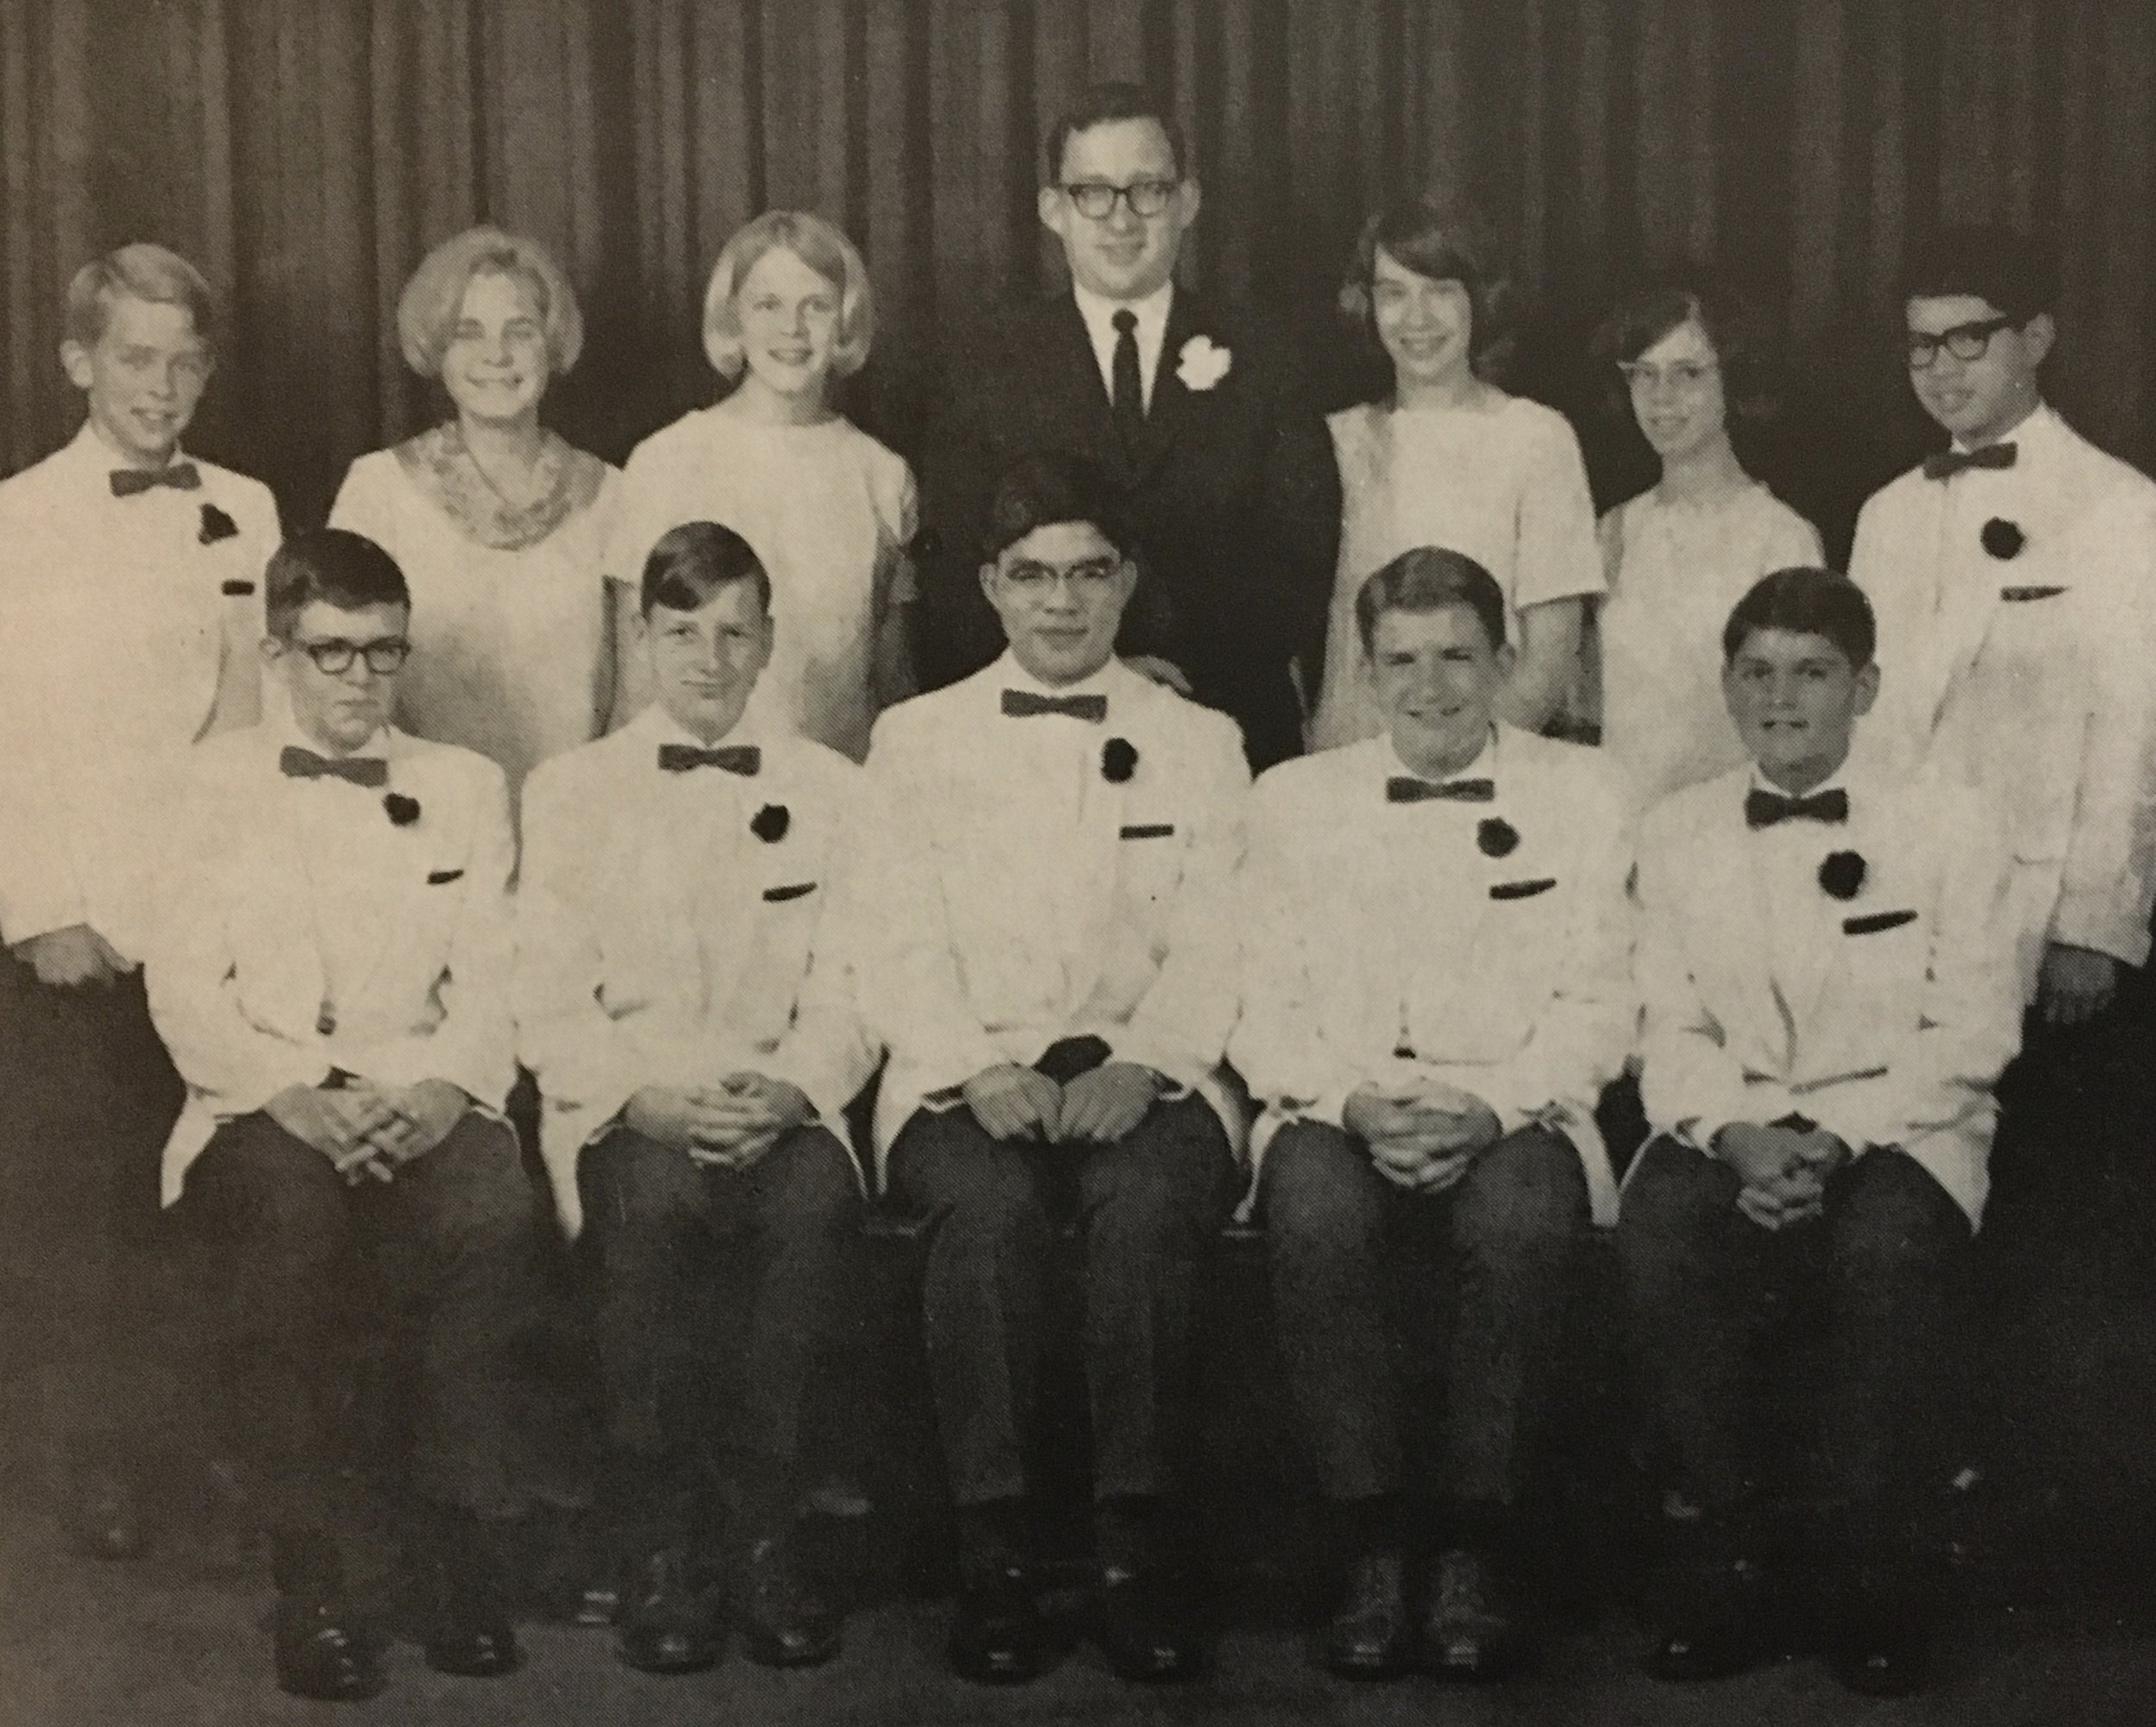 1967 confirmation class